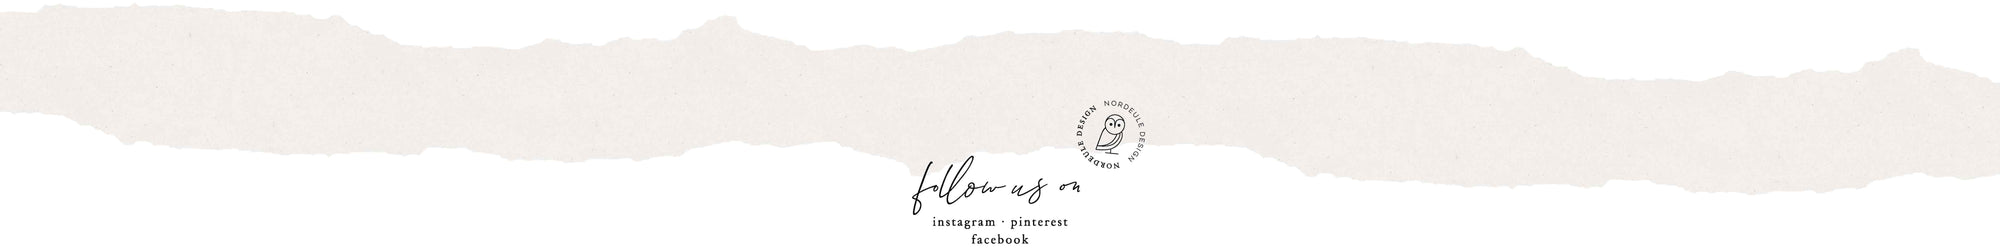 Nordeule Follow Us on Social Media Kanäle Banner Instagram Facebook Pinterest